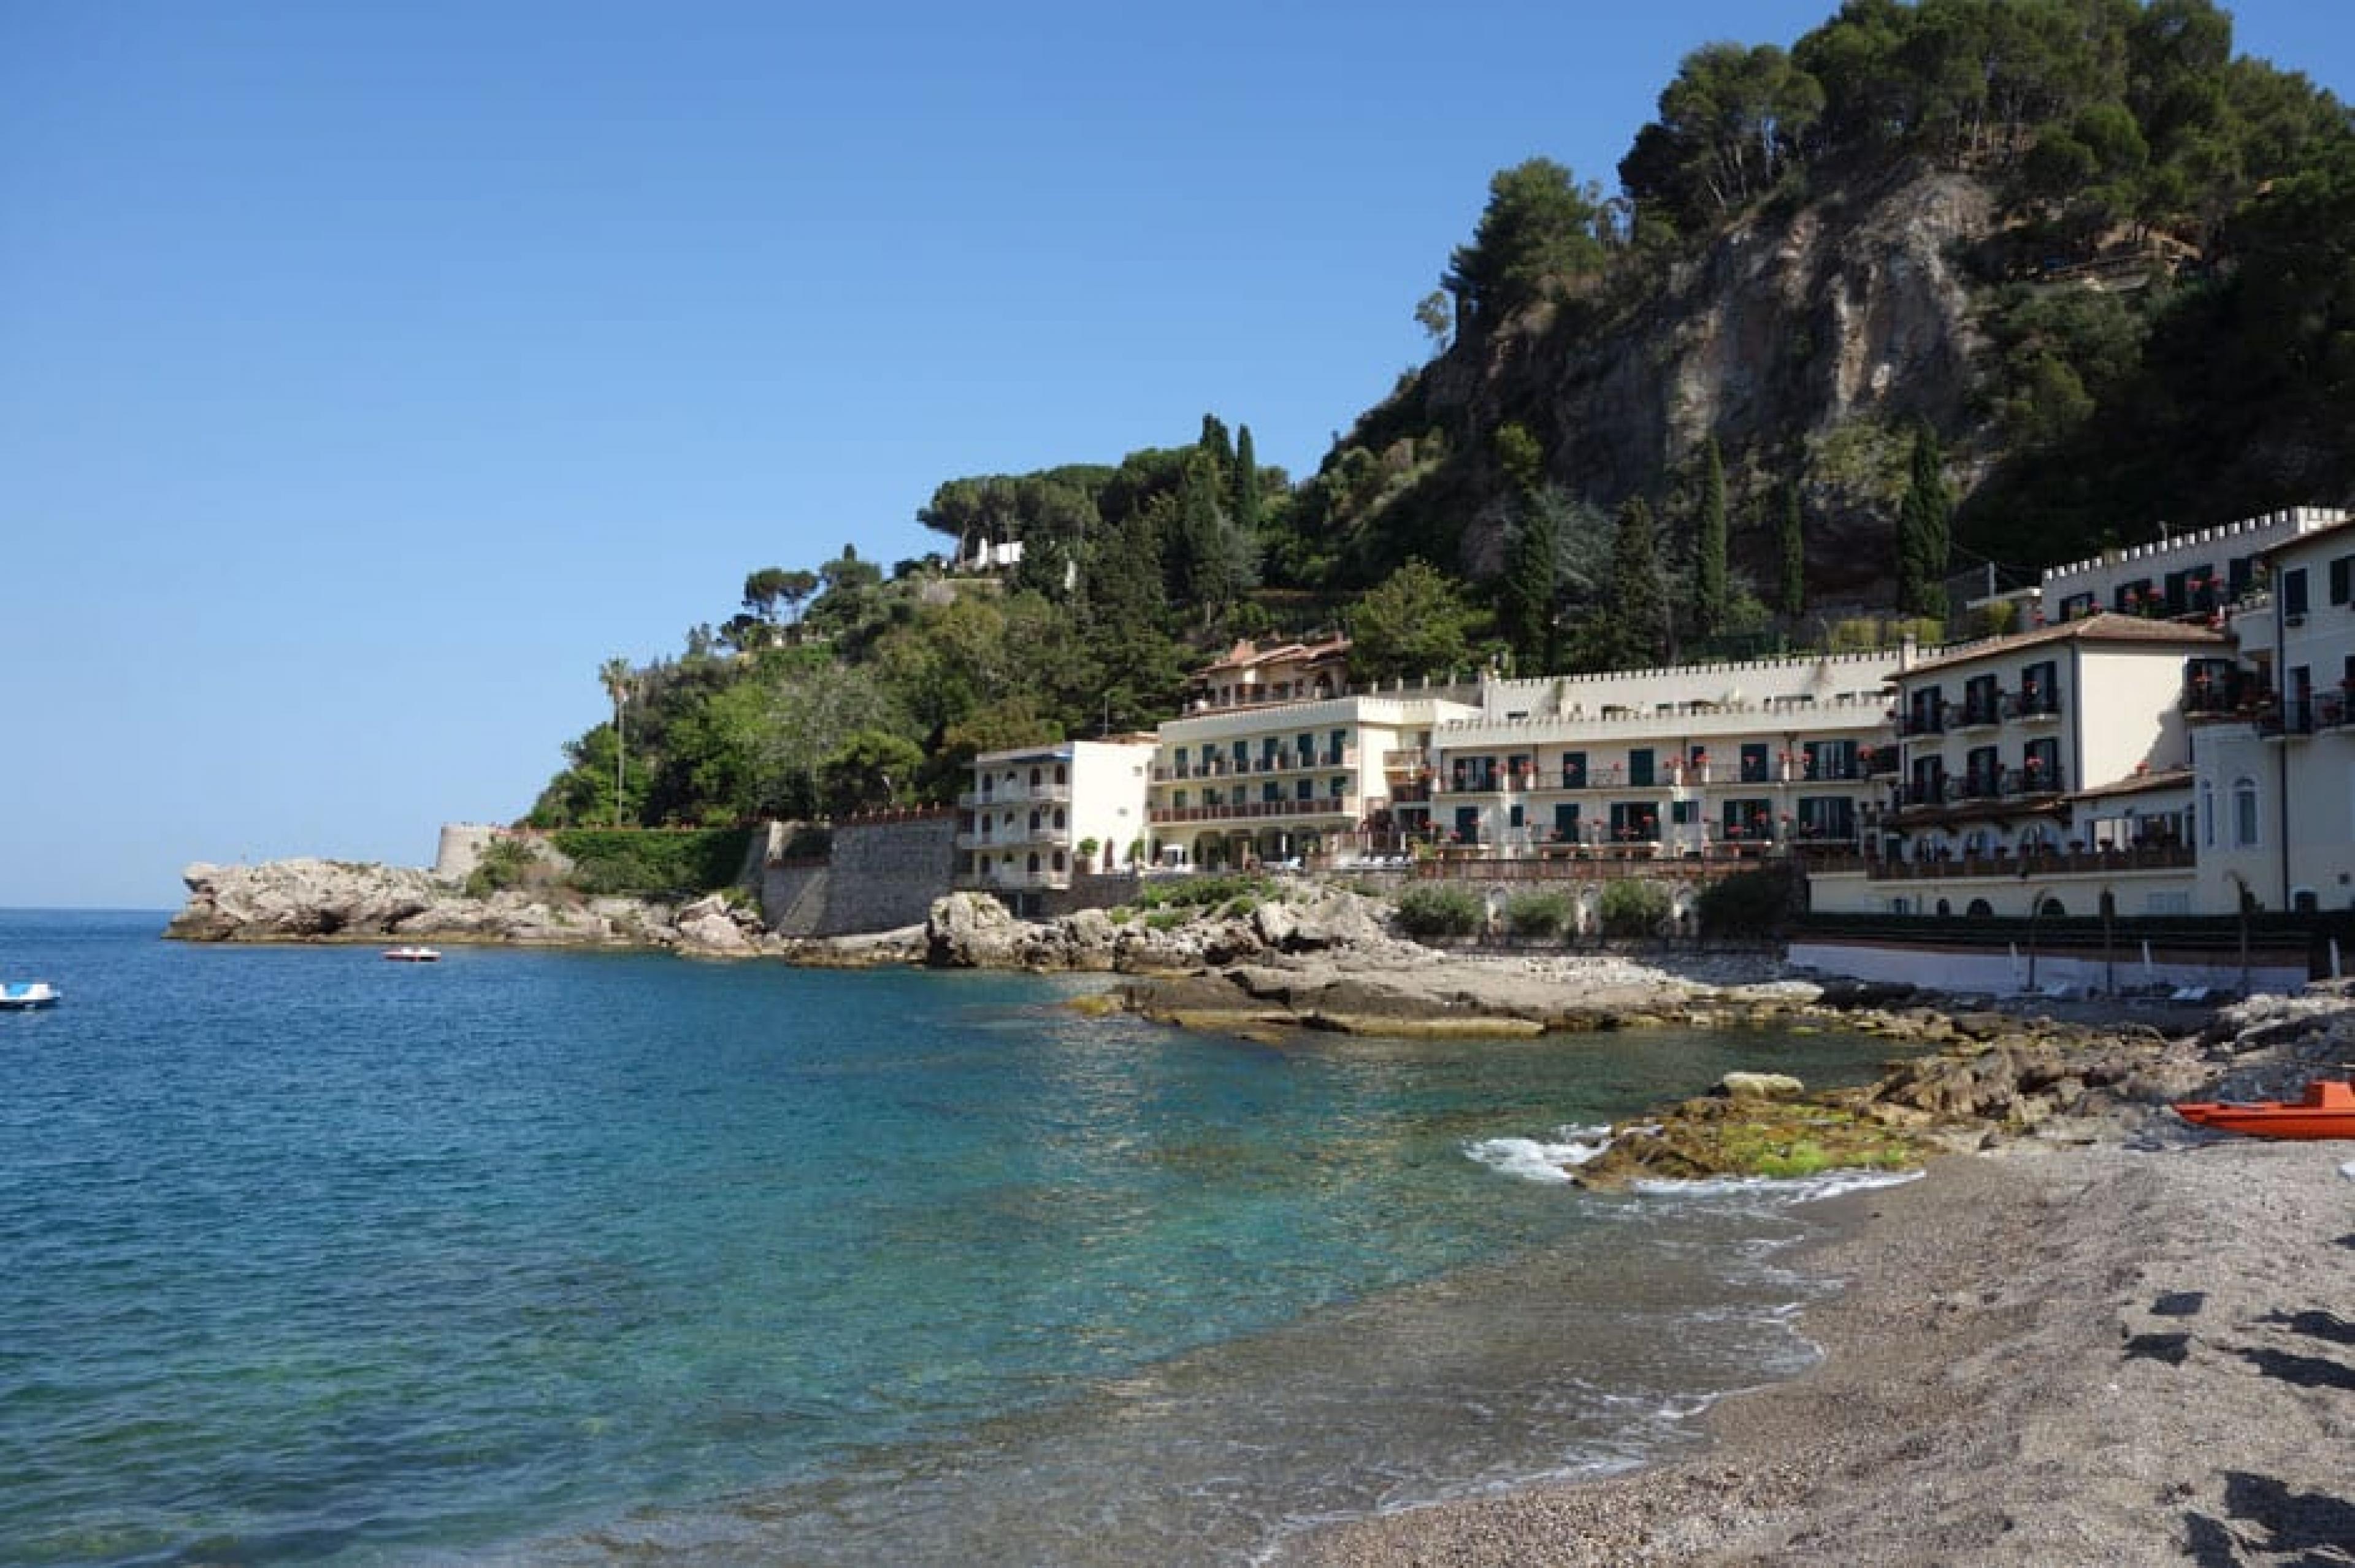 Beach view - Belmond Villa Sant’ Andrea, Sicily, Italy